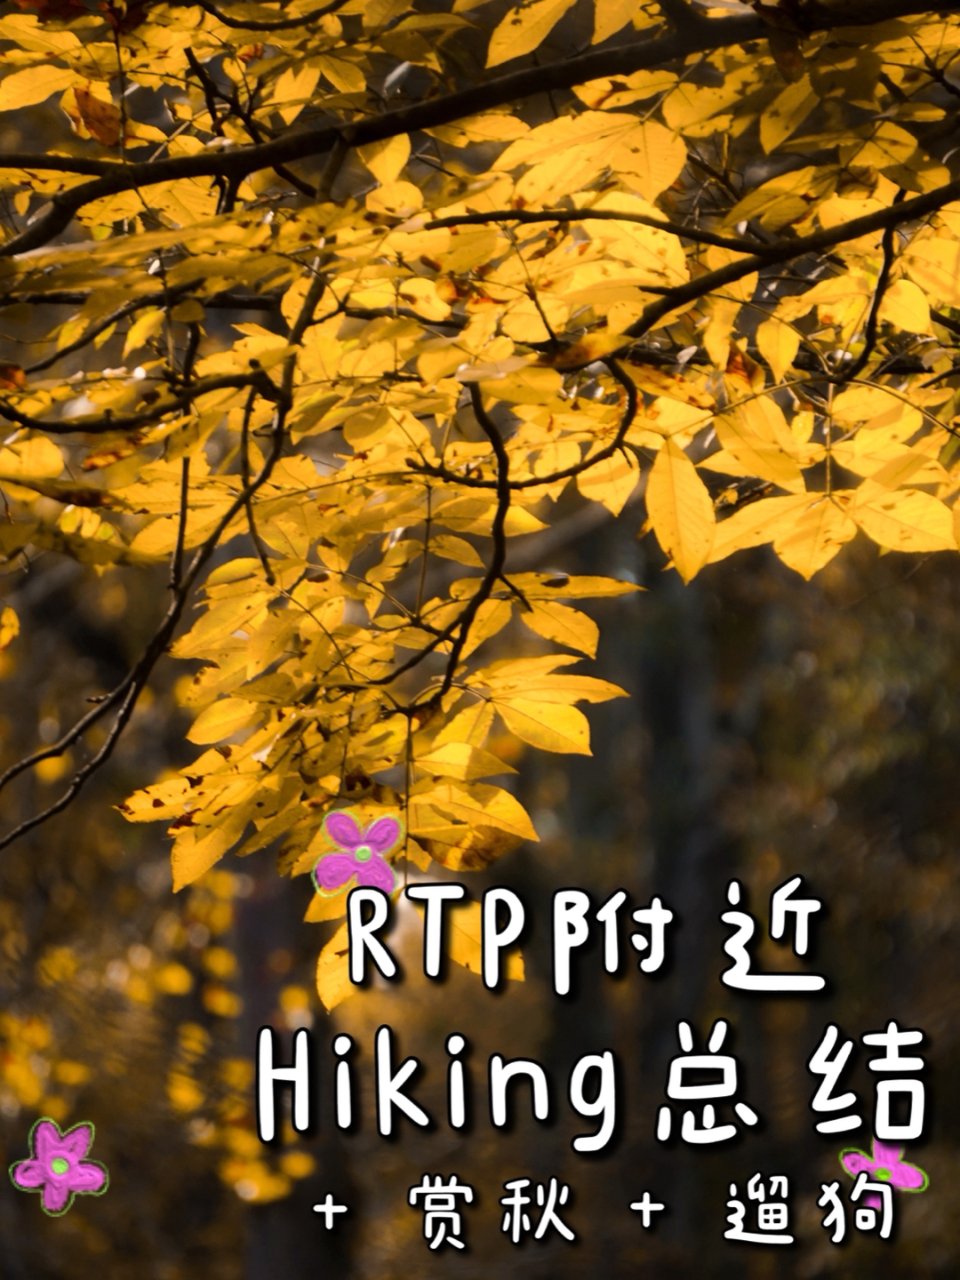 RTP附近周末hiking总结 + 赏秋...